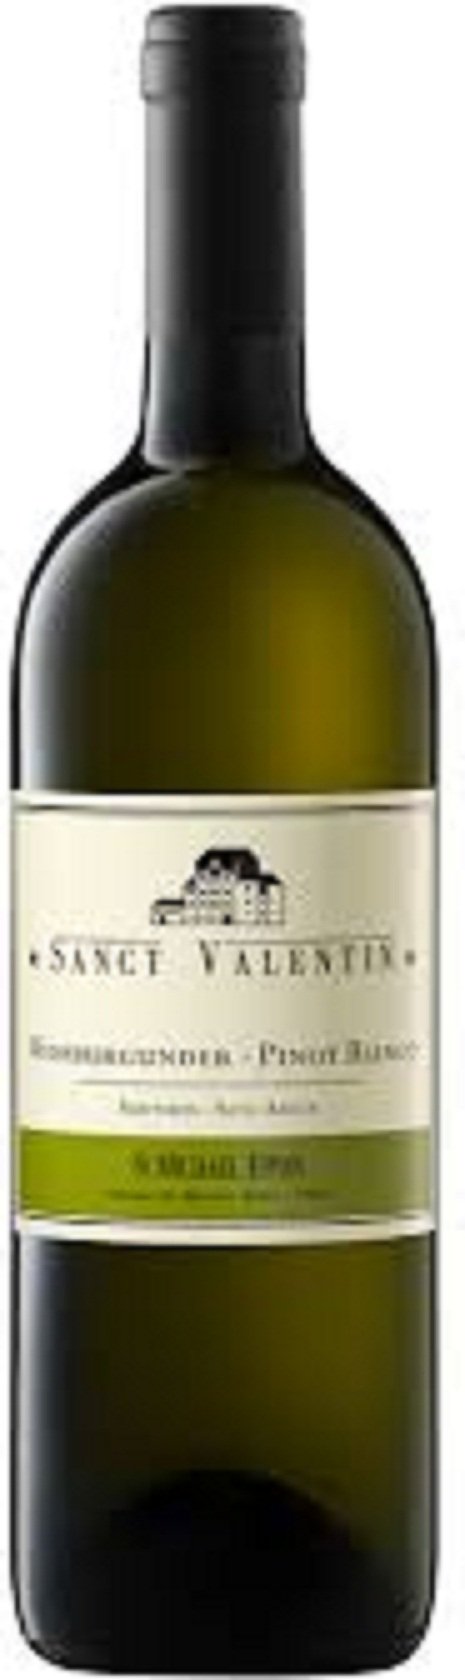 St. Michael-Eppan Pinot Bianco Sanct Valentin 2012